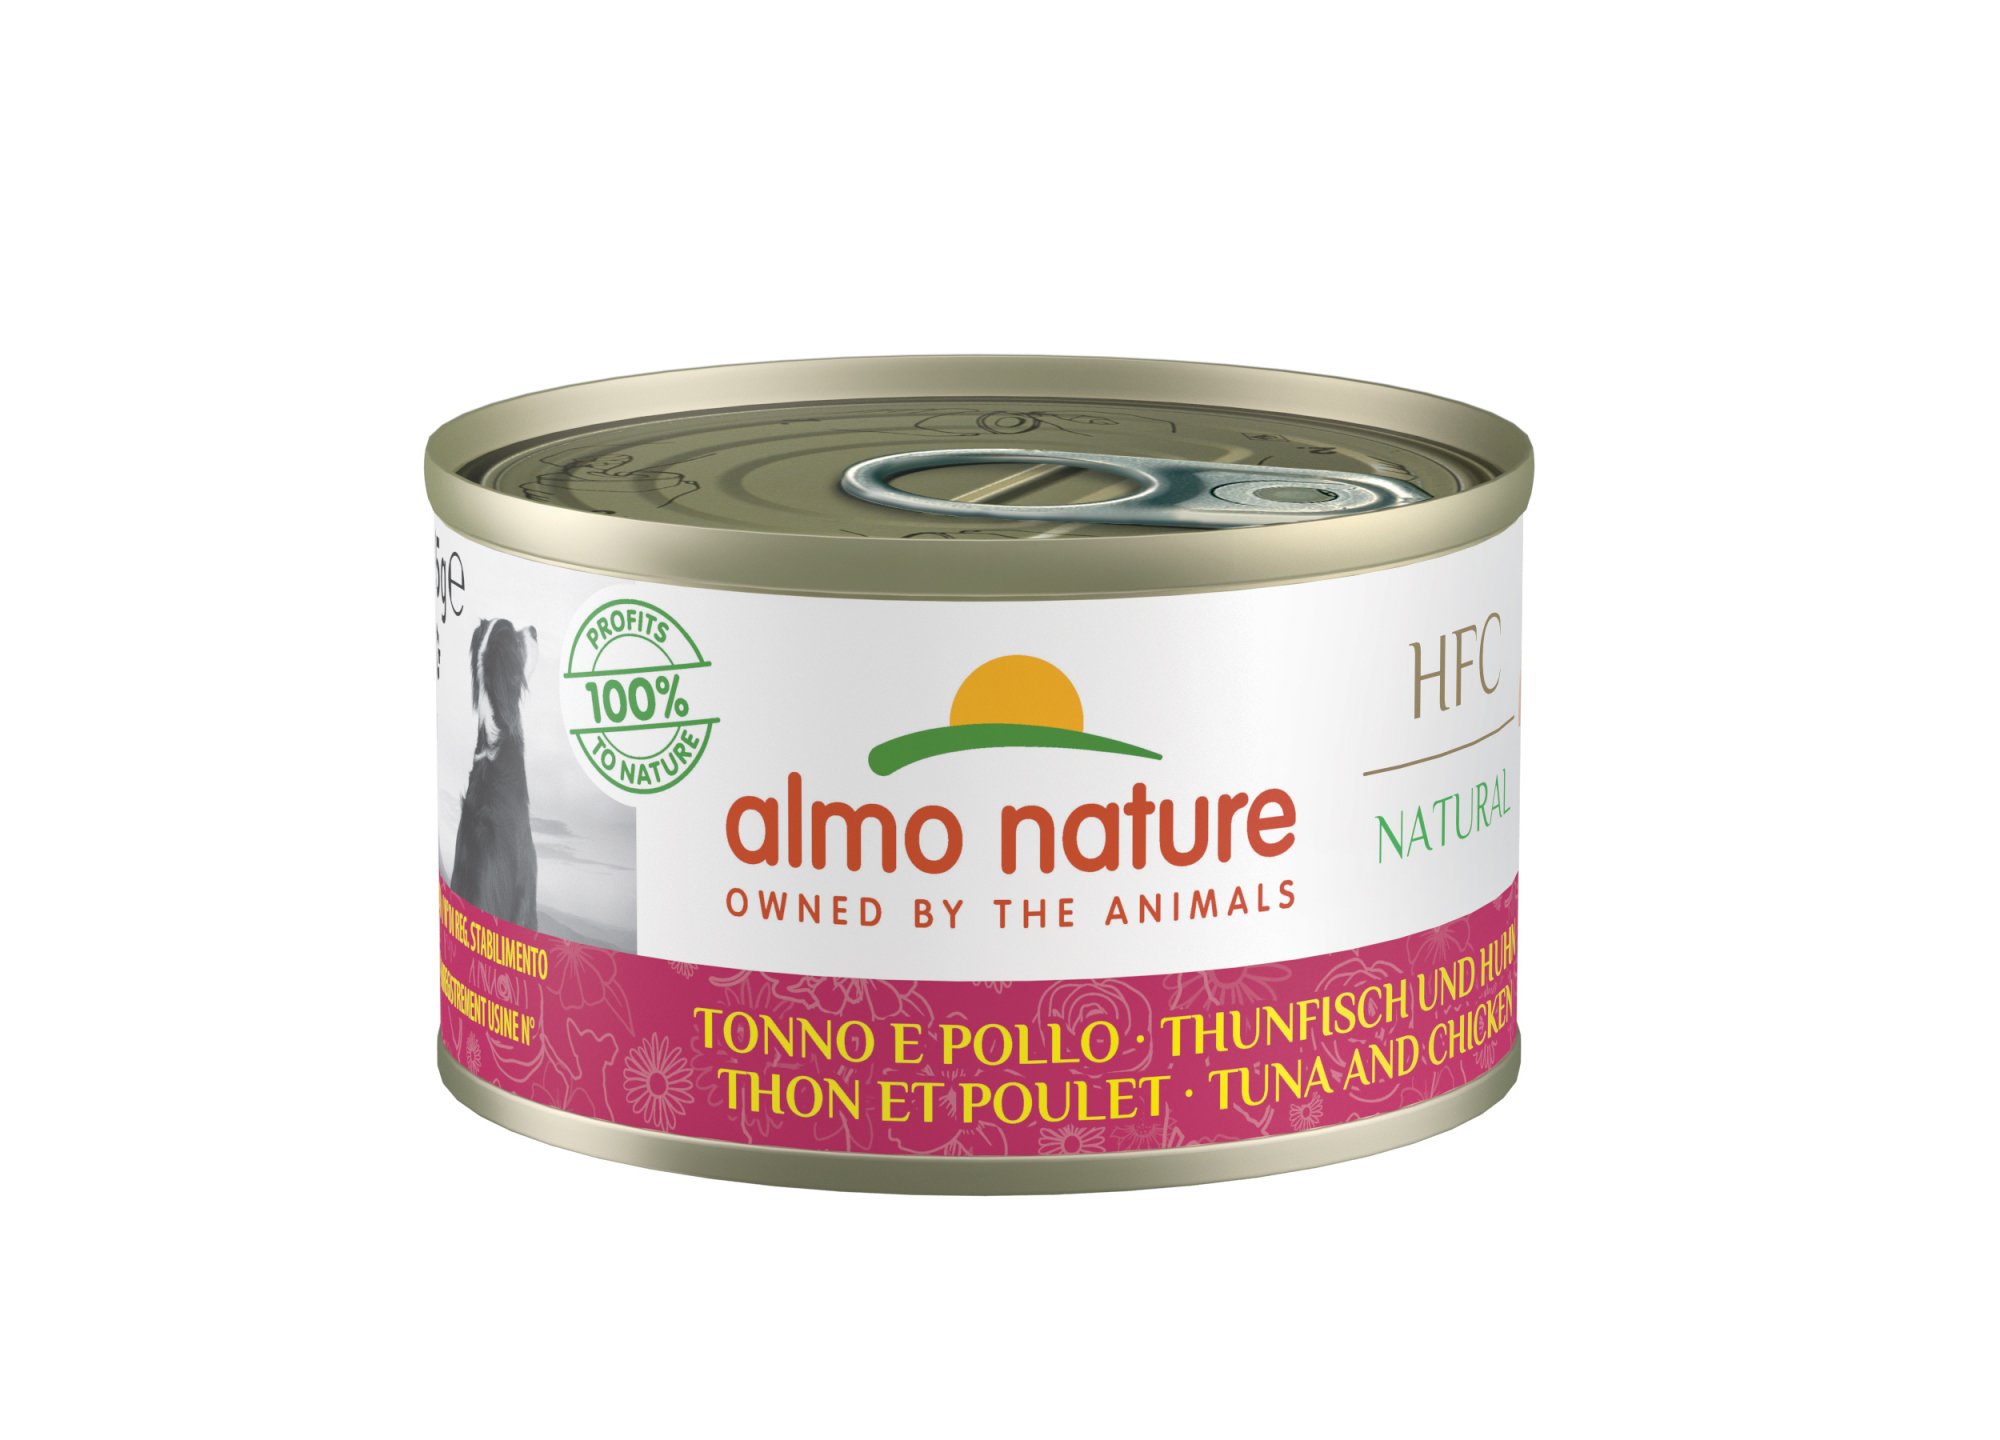 ALMO NATURE HFC Natural 95g Latas para perros - 5 recetas para escoger